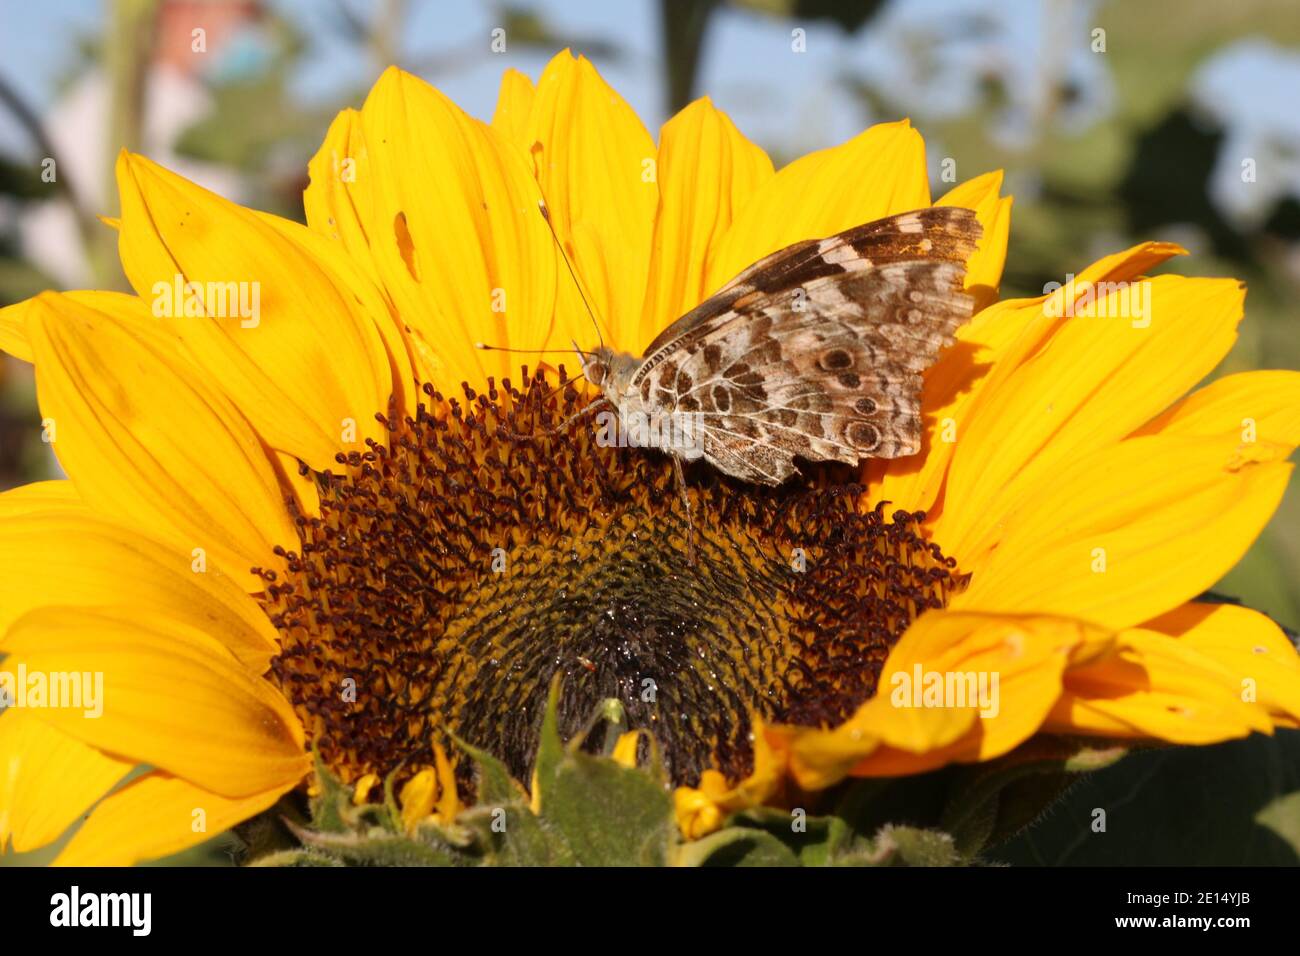 A moth sitting on a sun flower Stock Photo